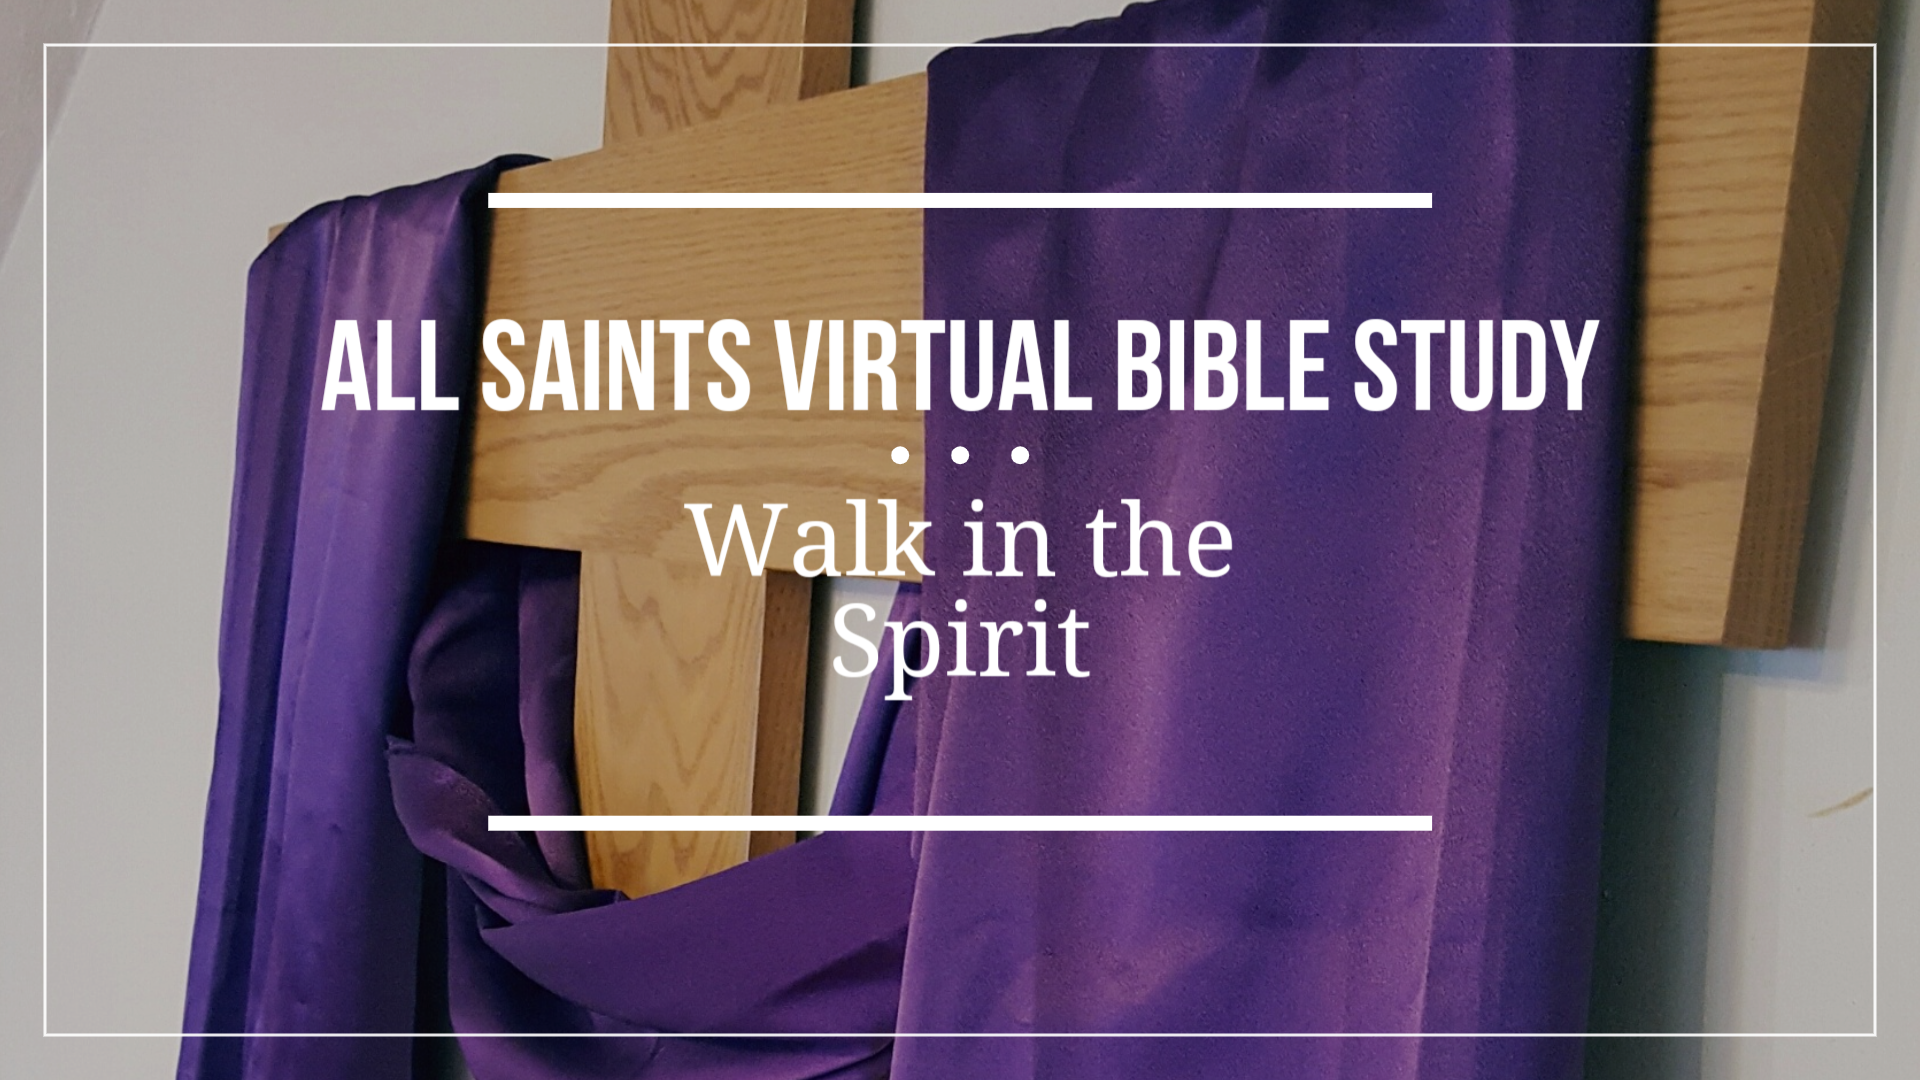 All Saints Virtual Bible Study - Walk in the Spirit